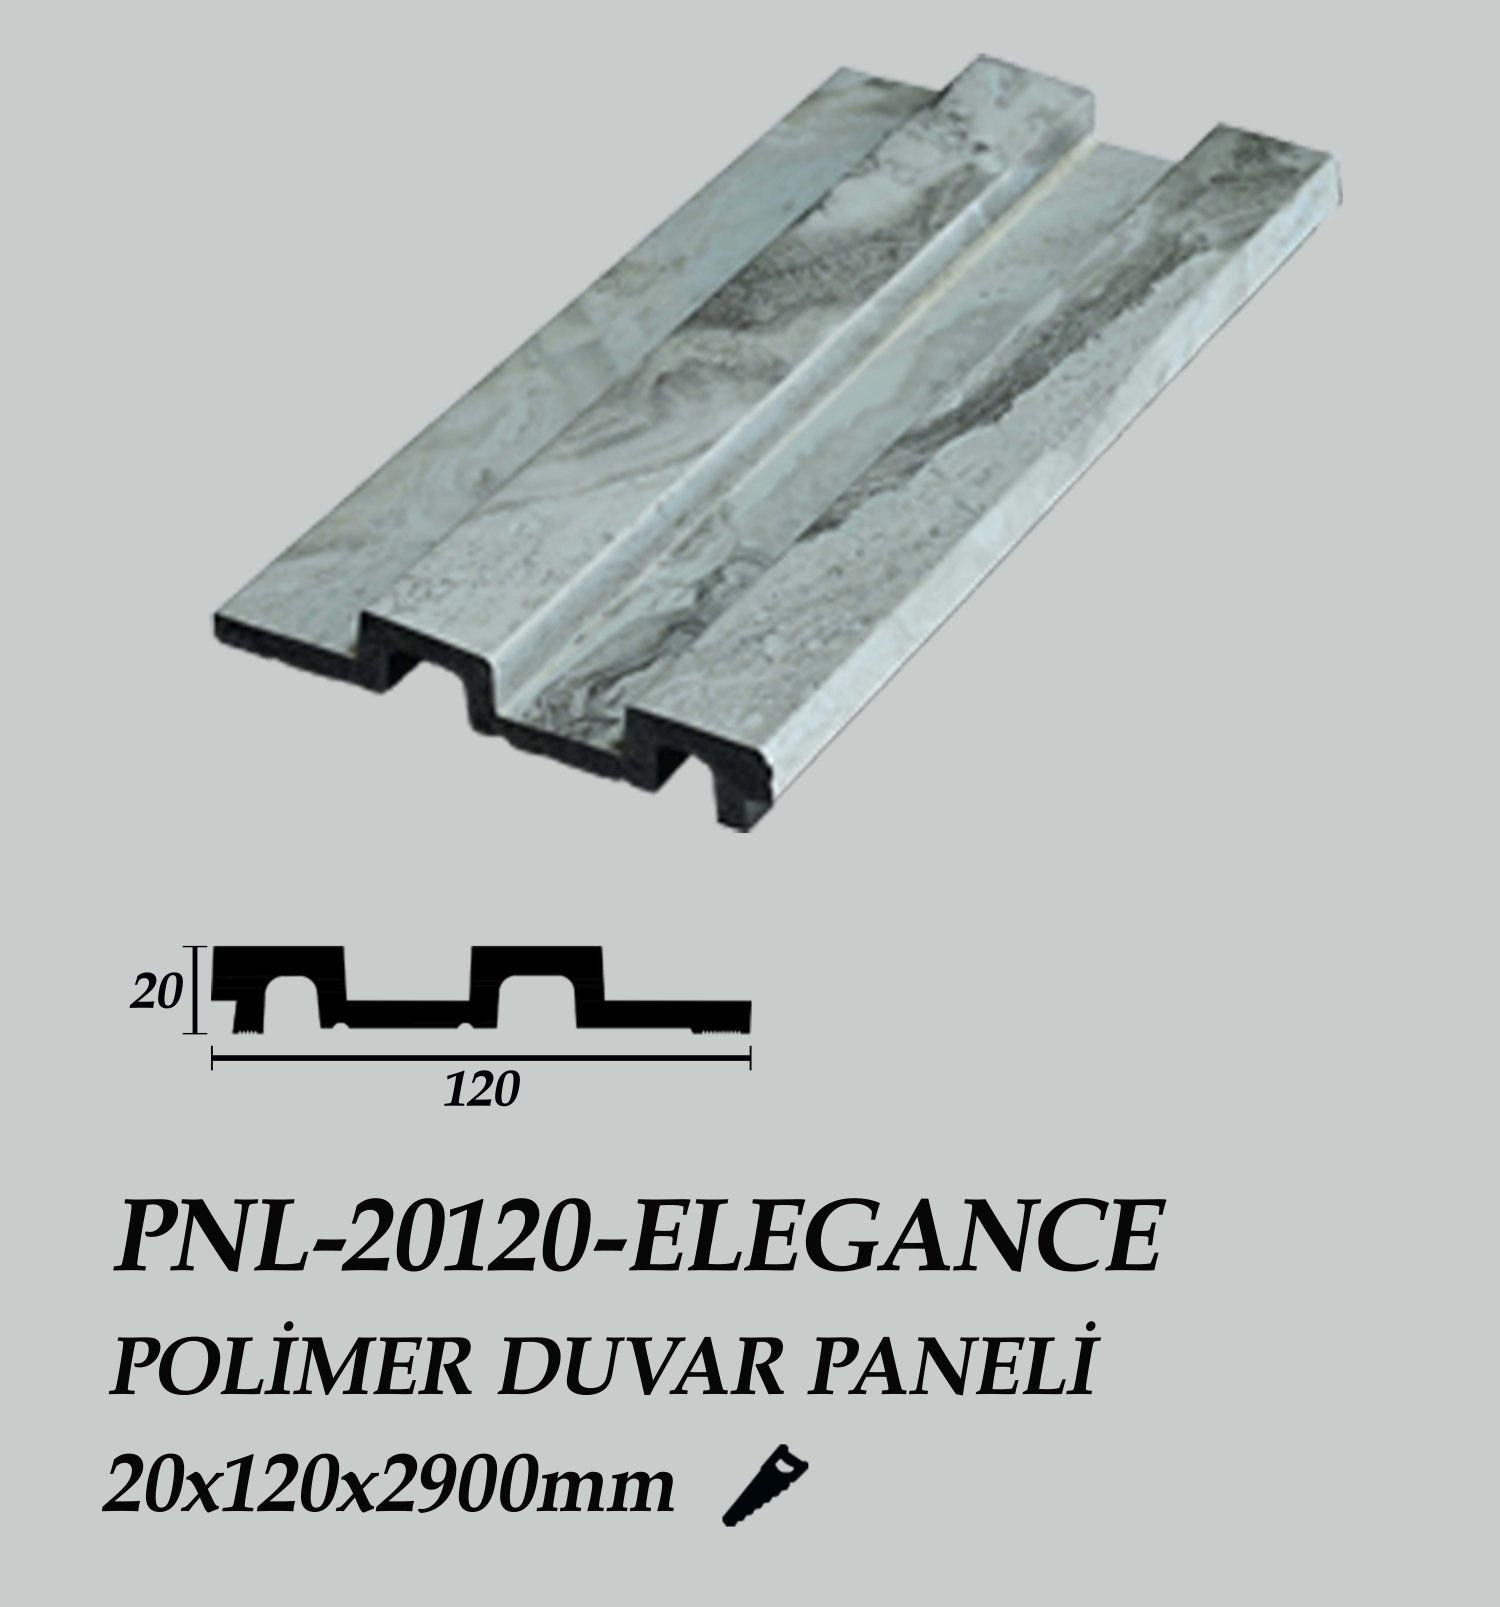 PNL-20120-ELEGANCE Polimer Duvar Paneli 20X120X2900mm